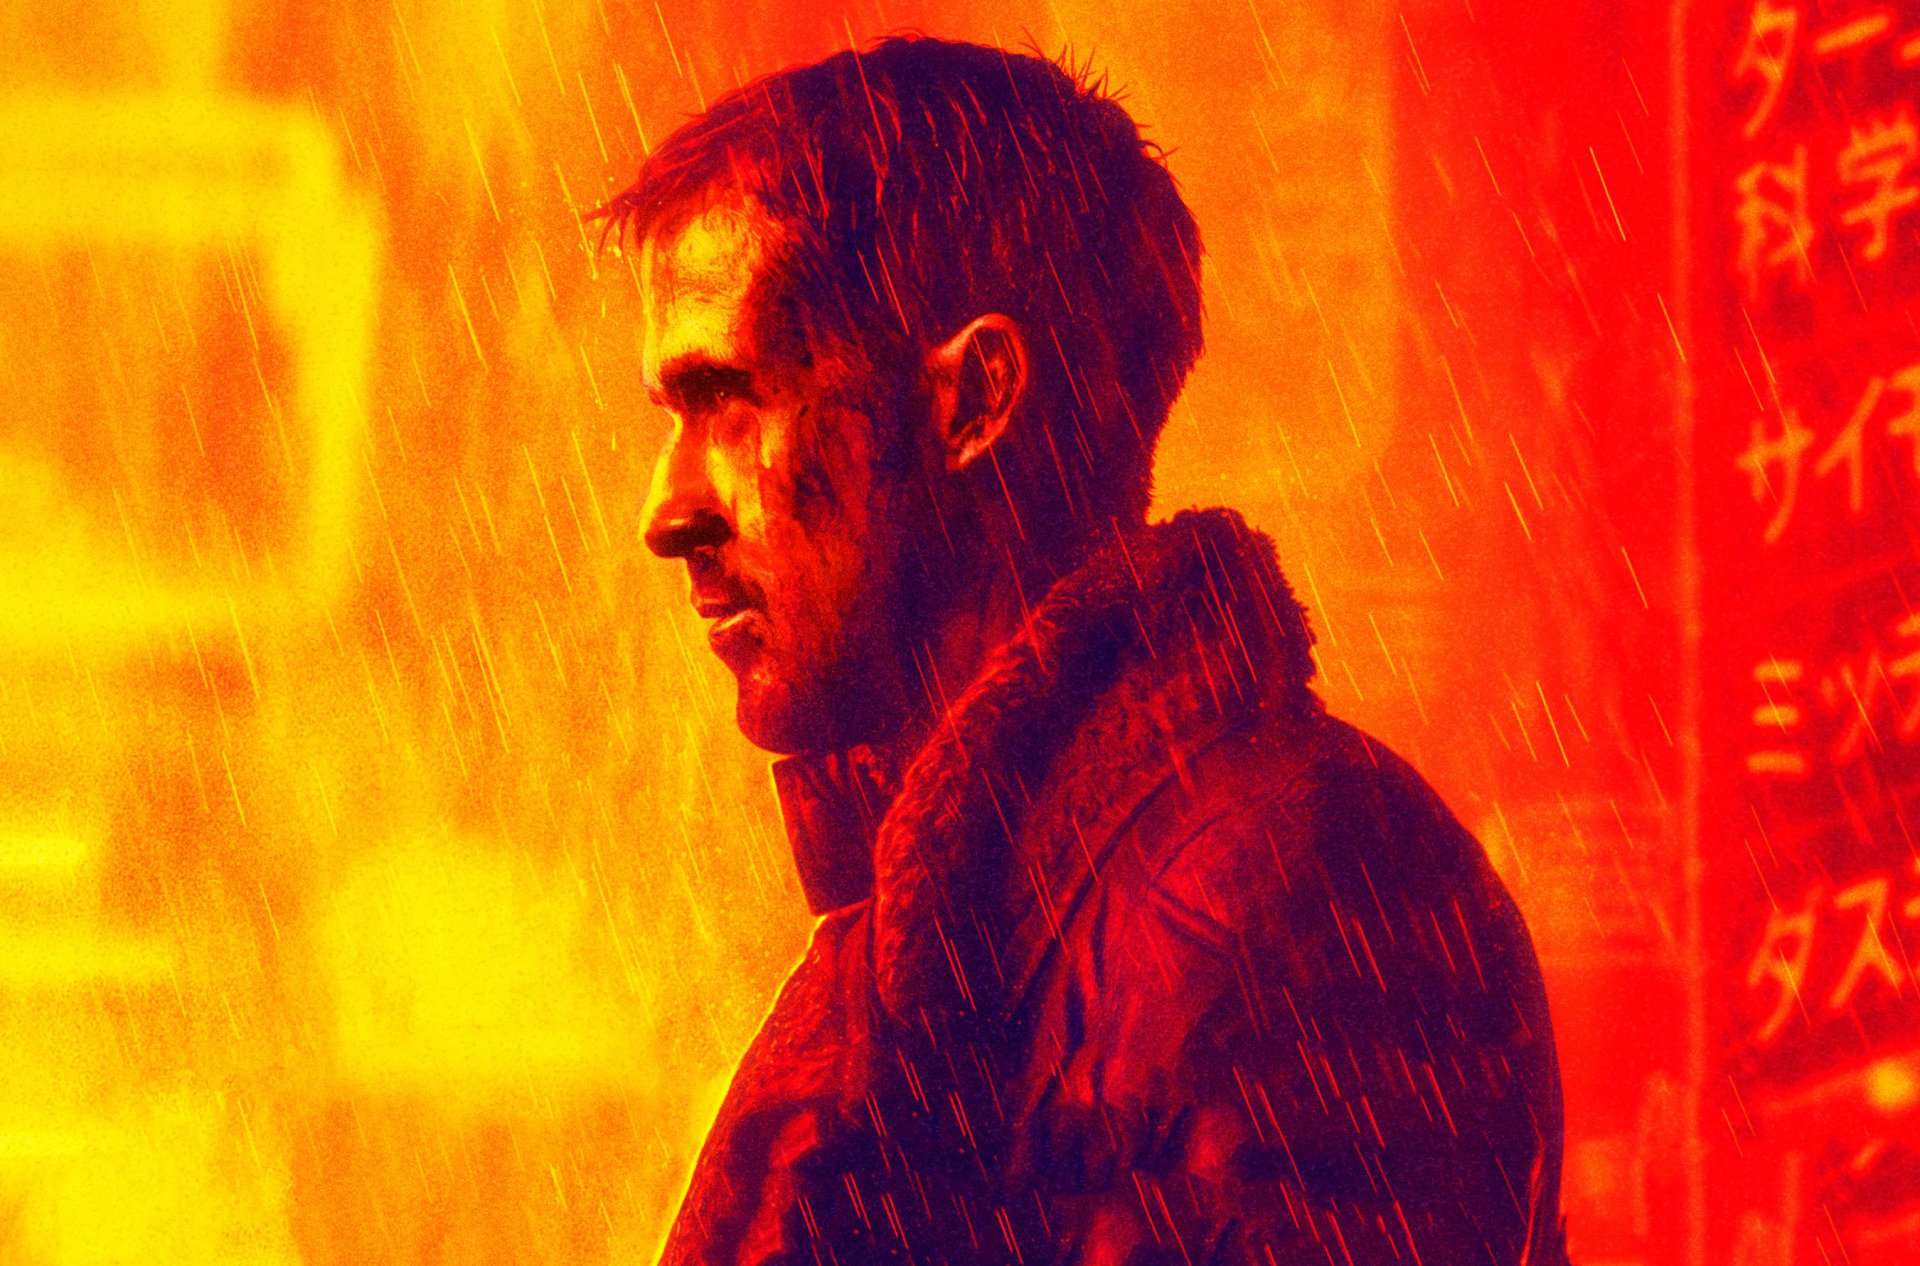 Download Officer K Blade Runner 2049 Ryan Gosling Movie Blade Runner 2049 Hd Wallpaper